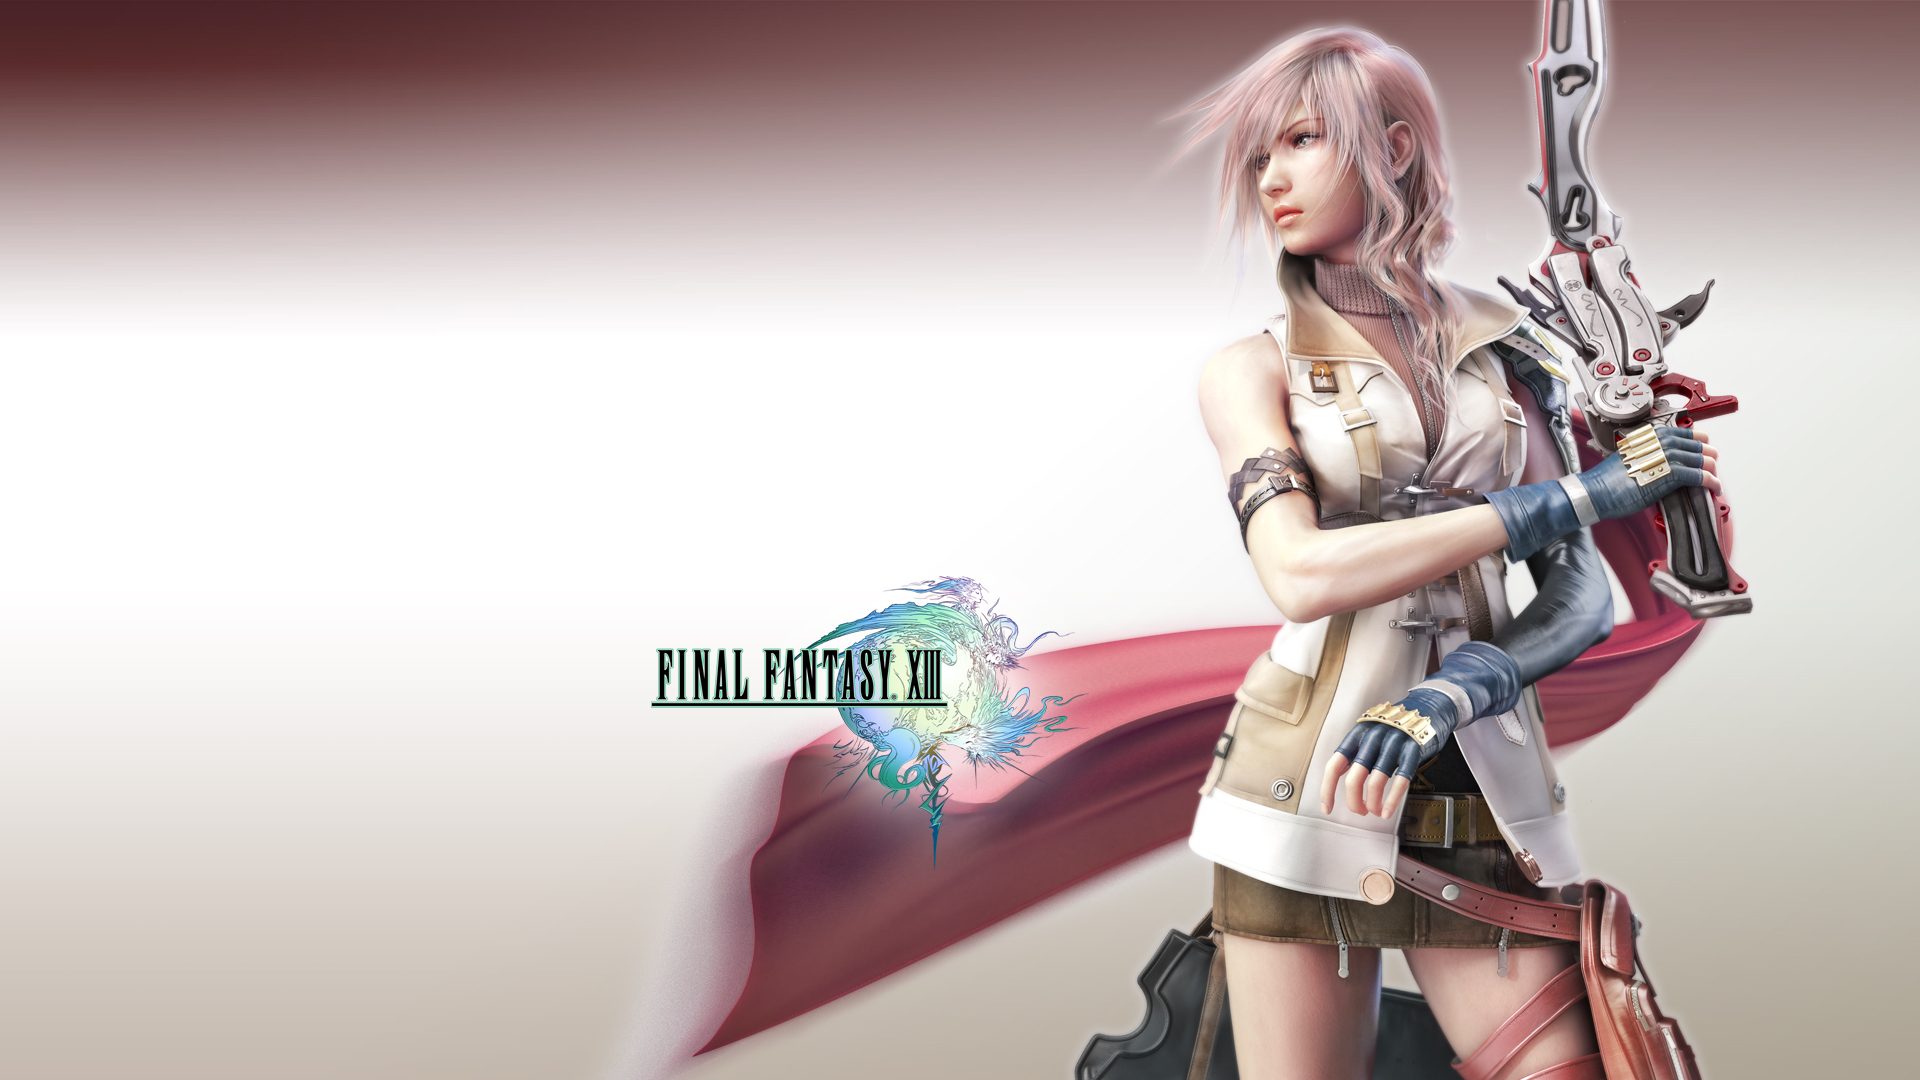 Final Fantasy XIII Art